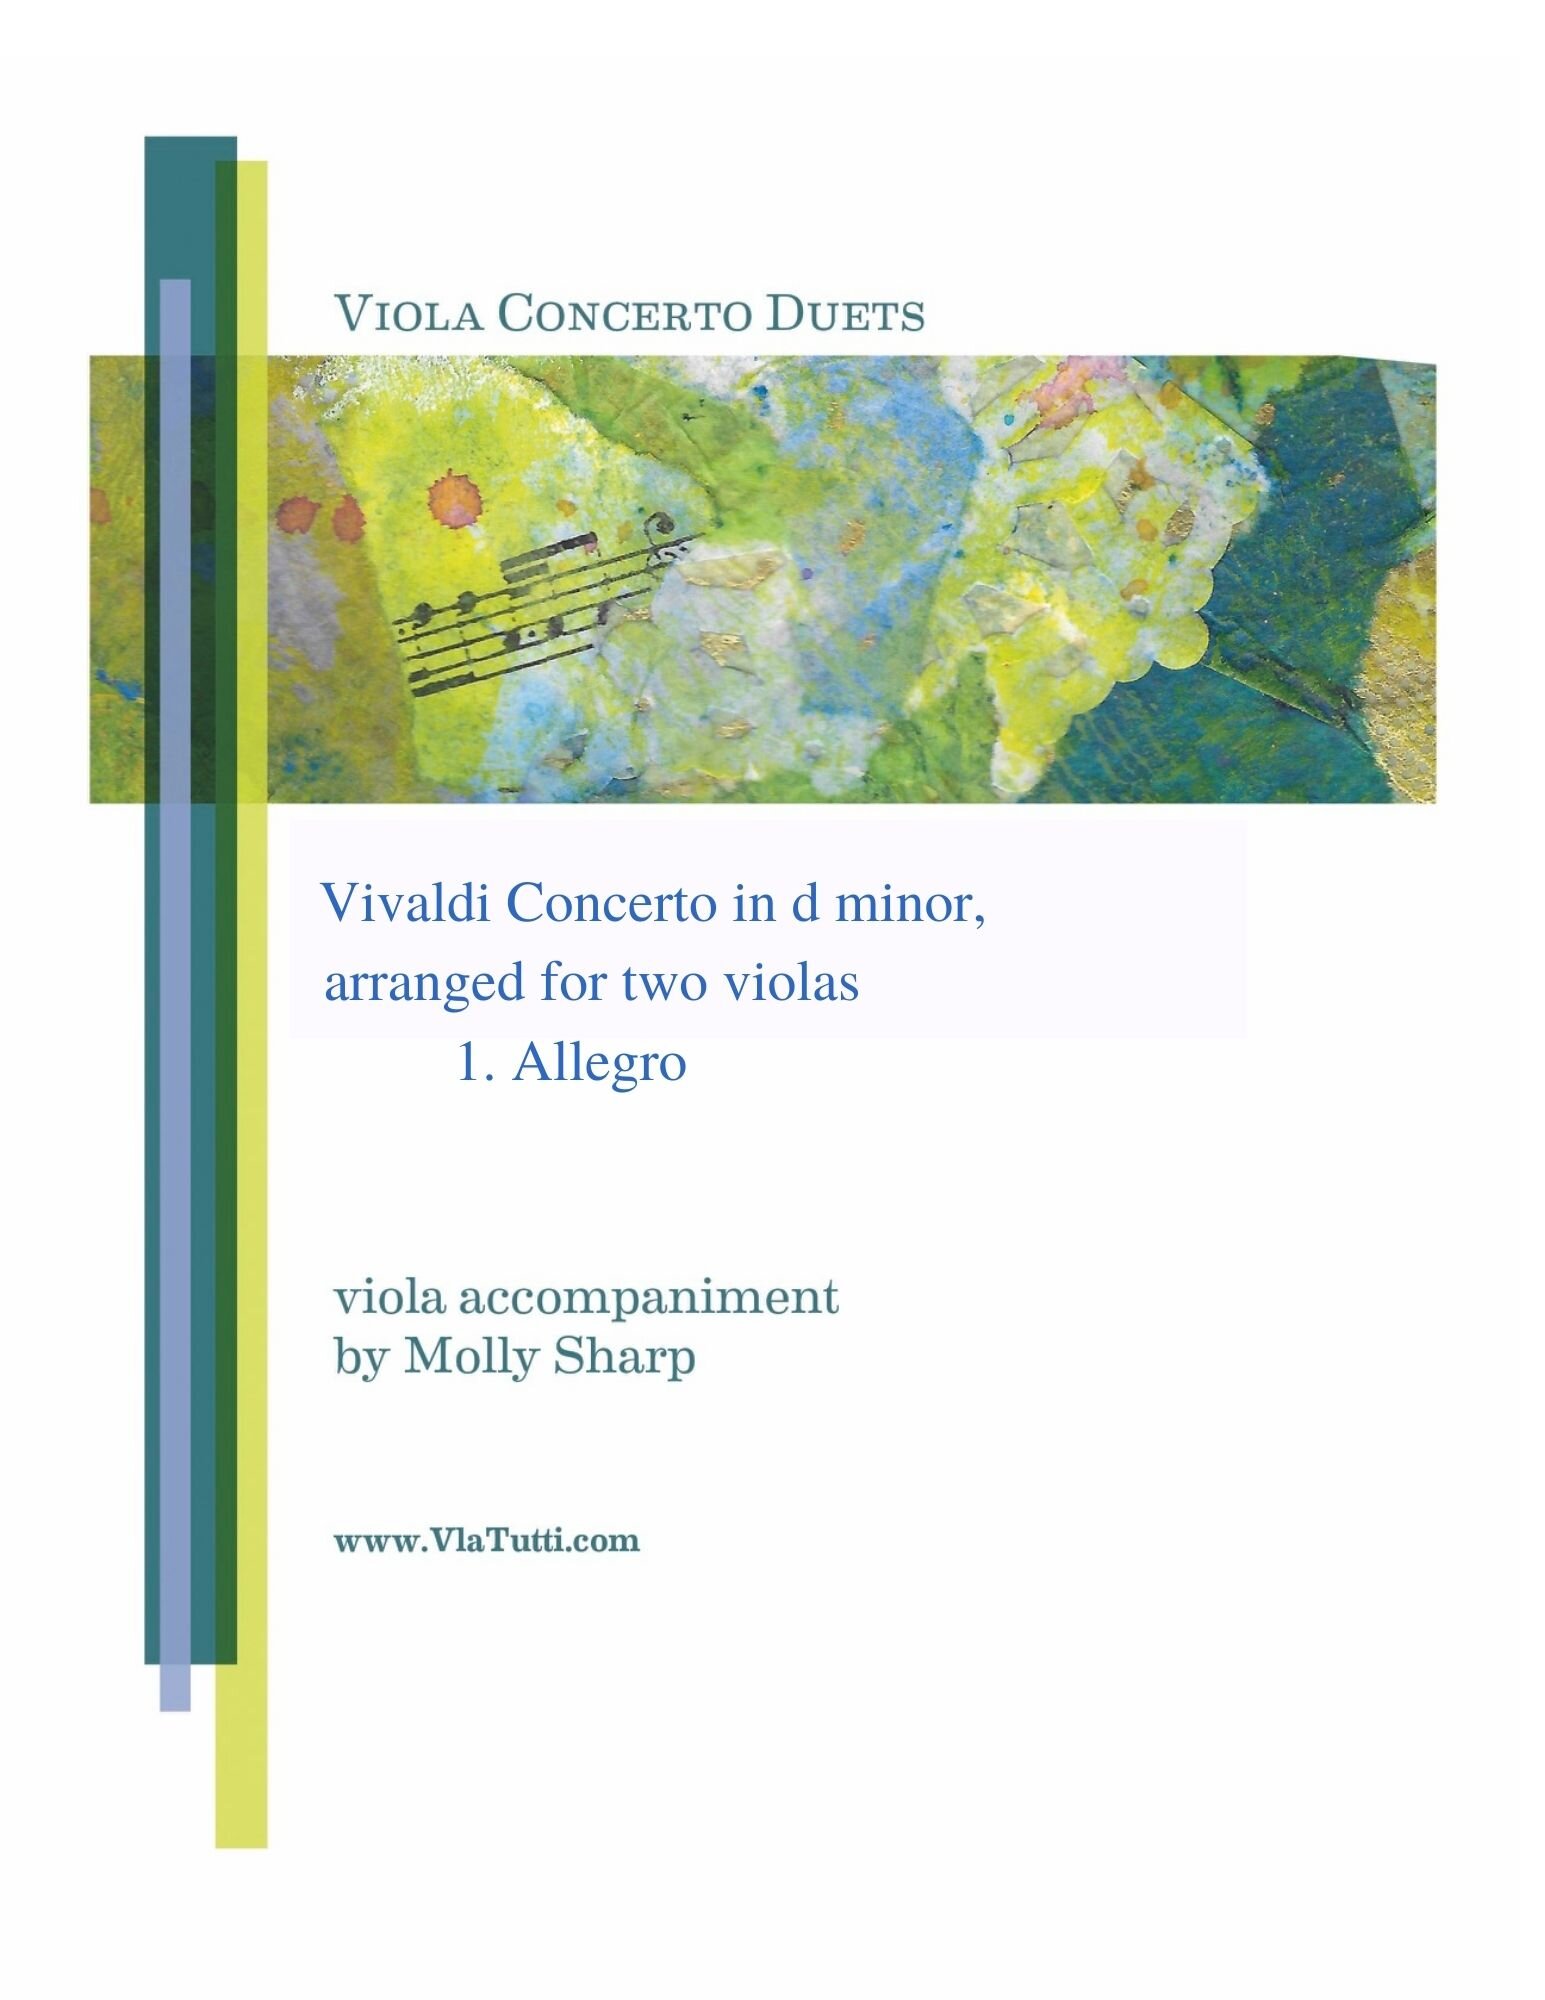 Vivaldi Concerto in D minor, viola